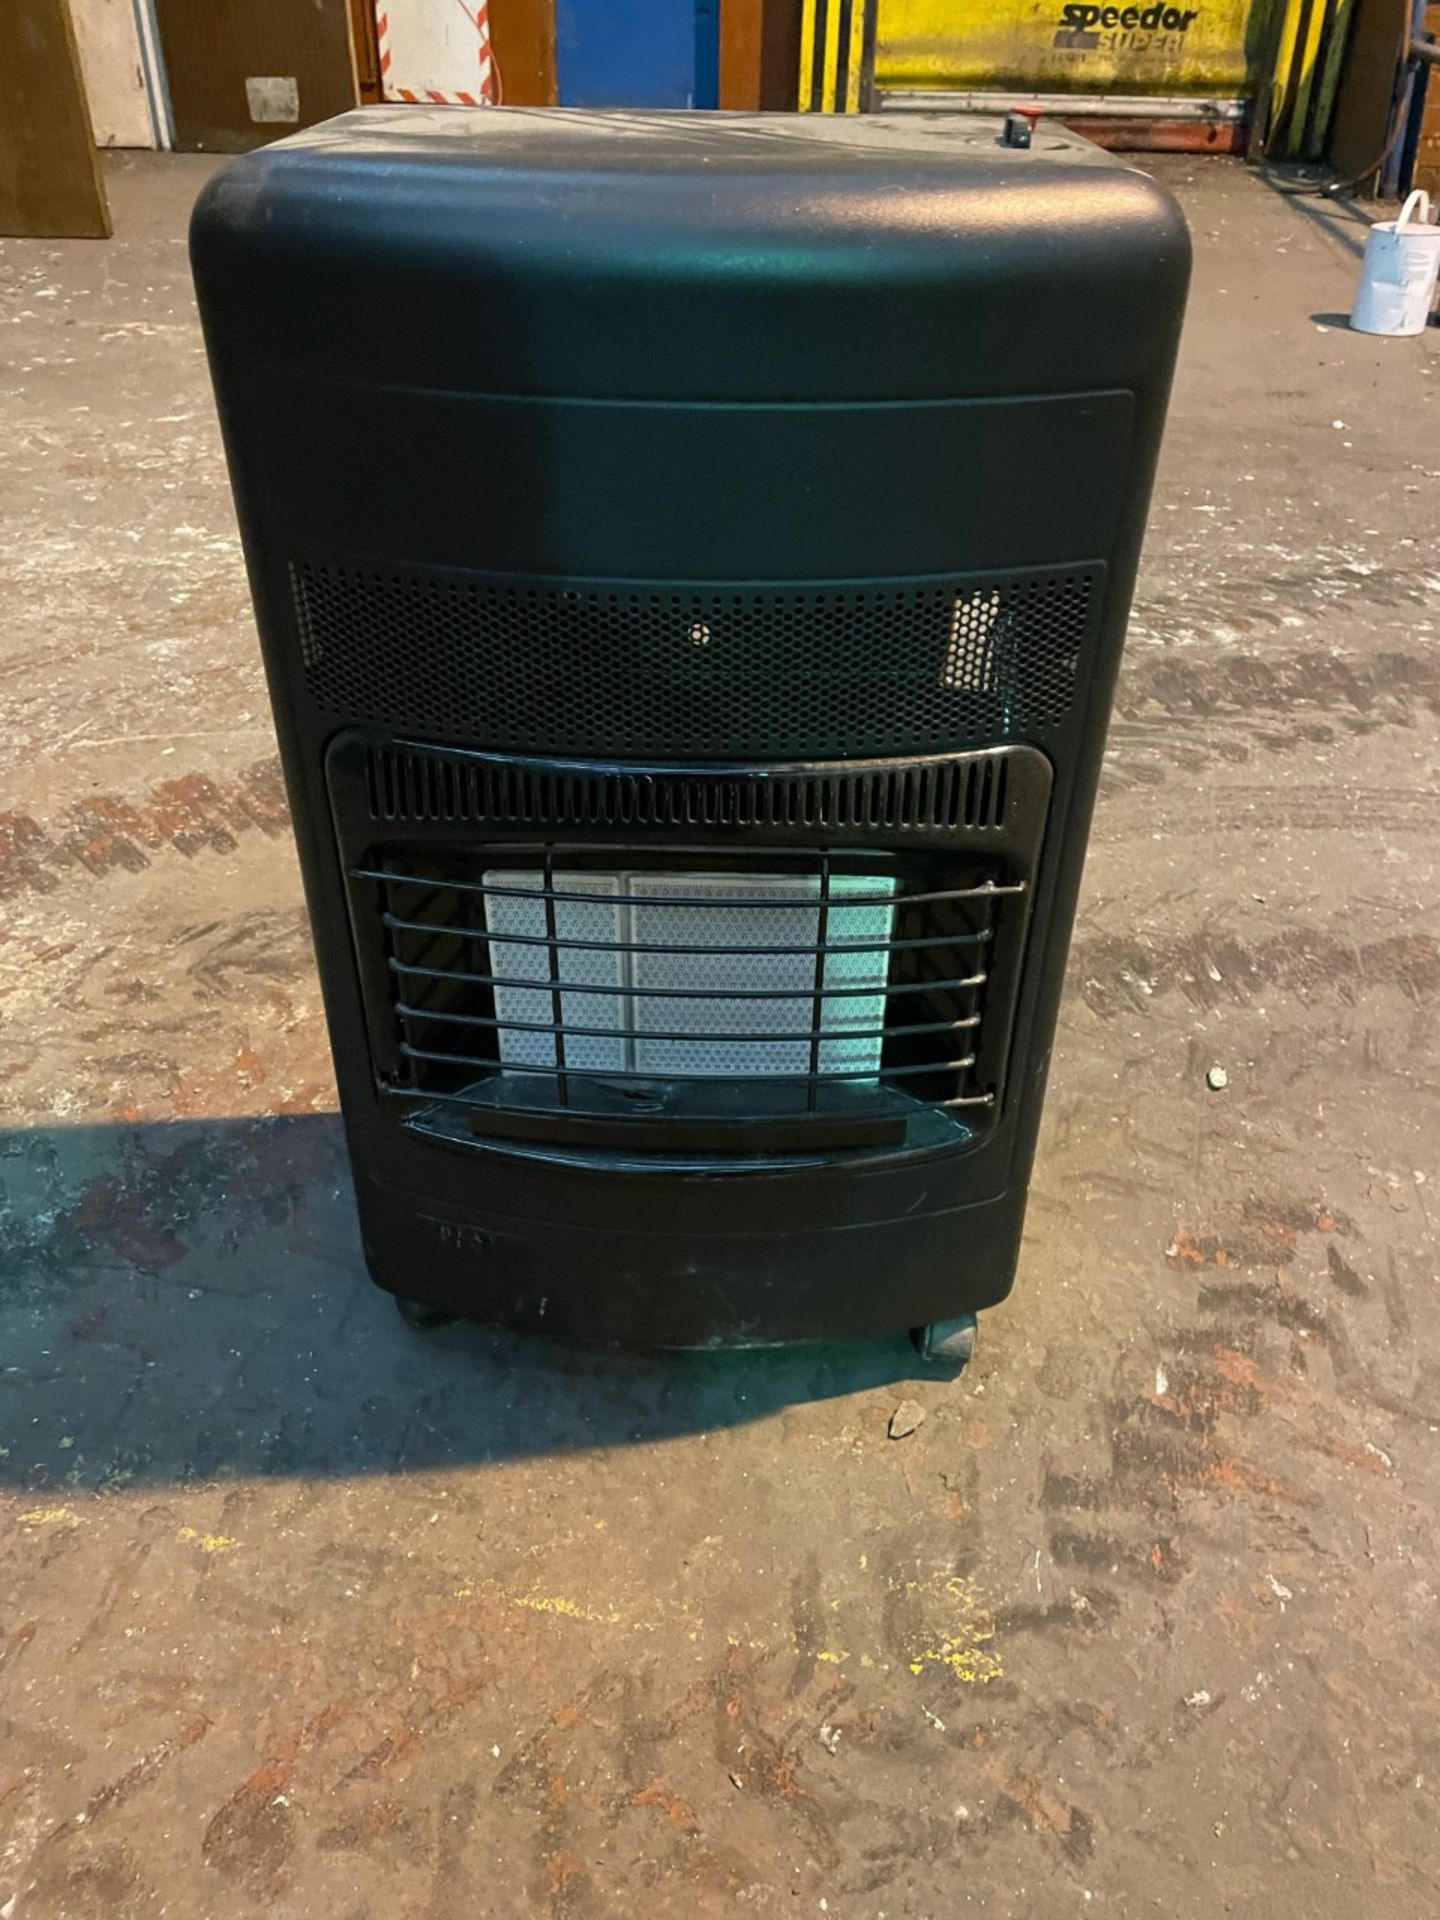 Heat line 4.2KW portable gas heater good working order